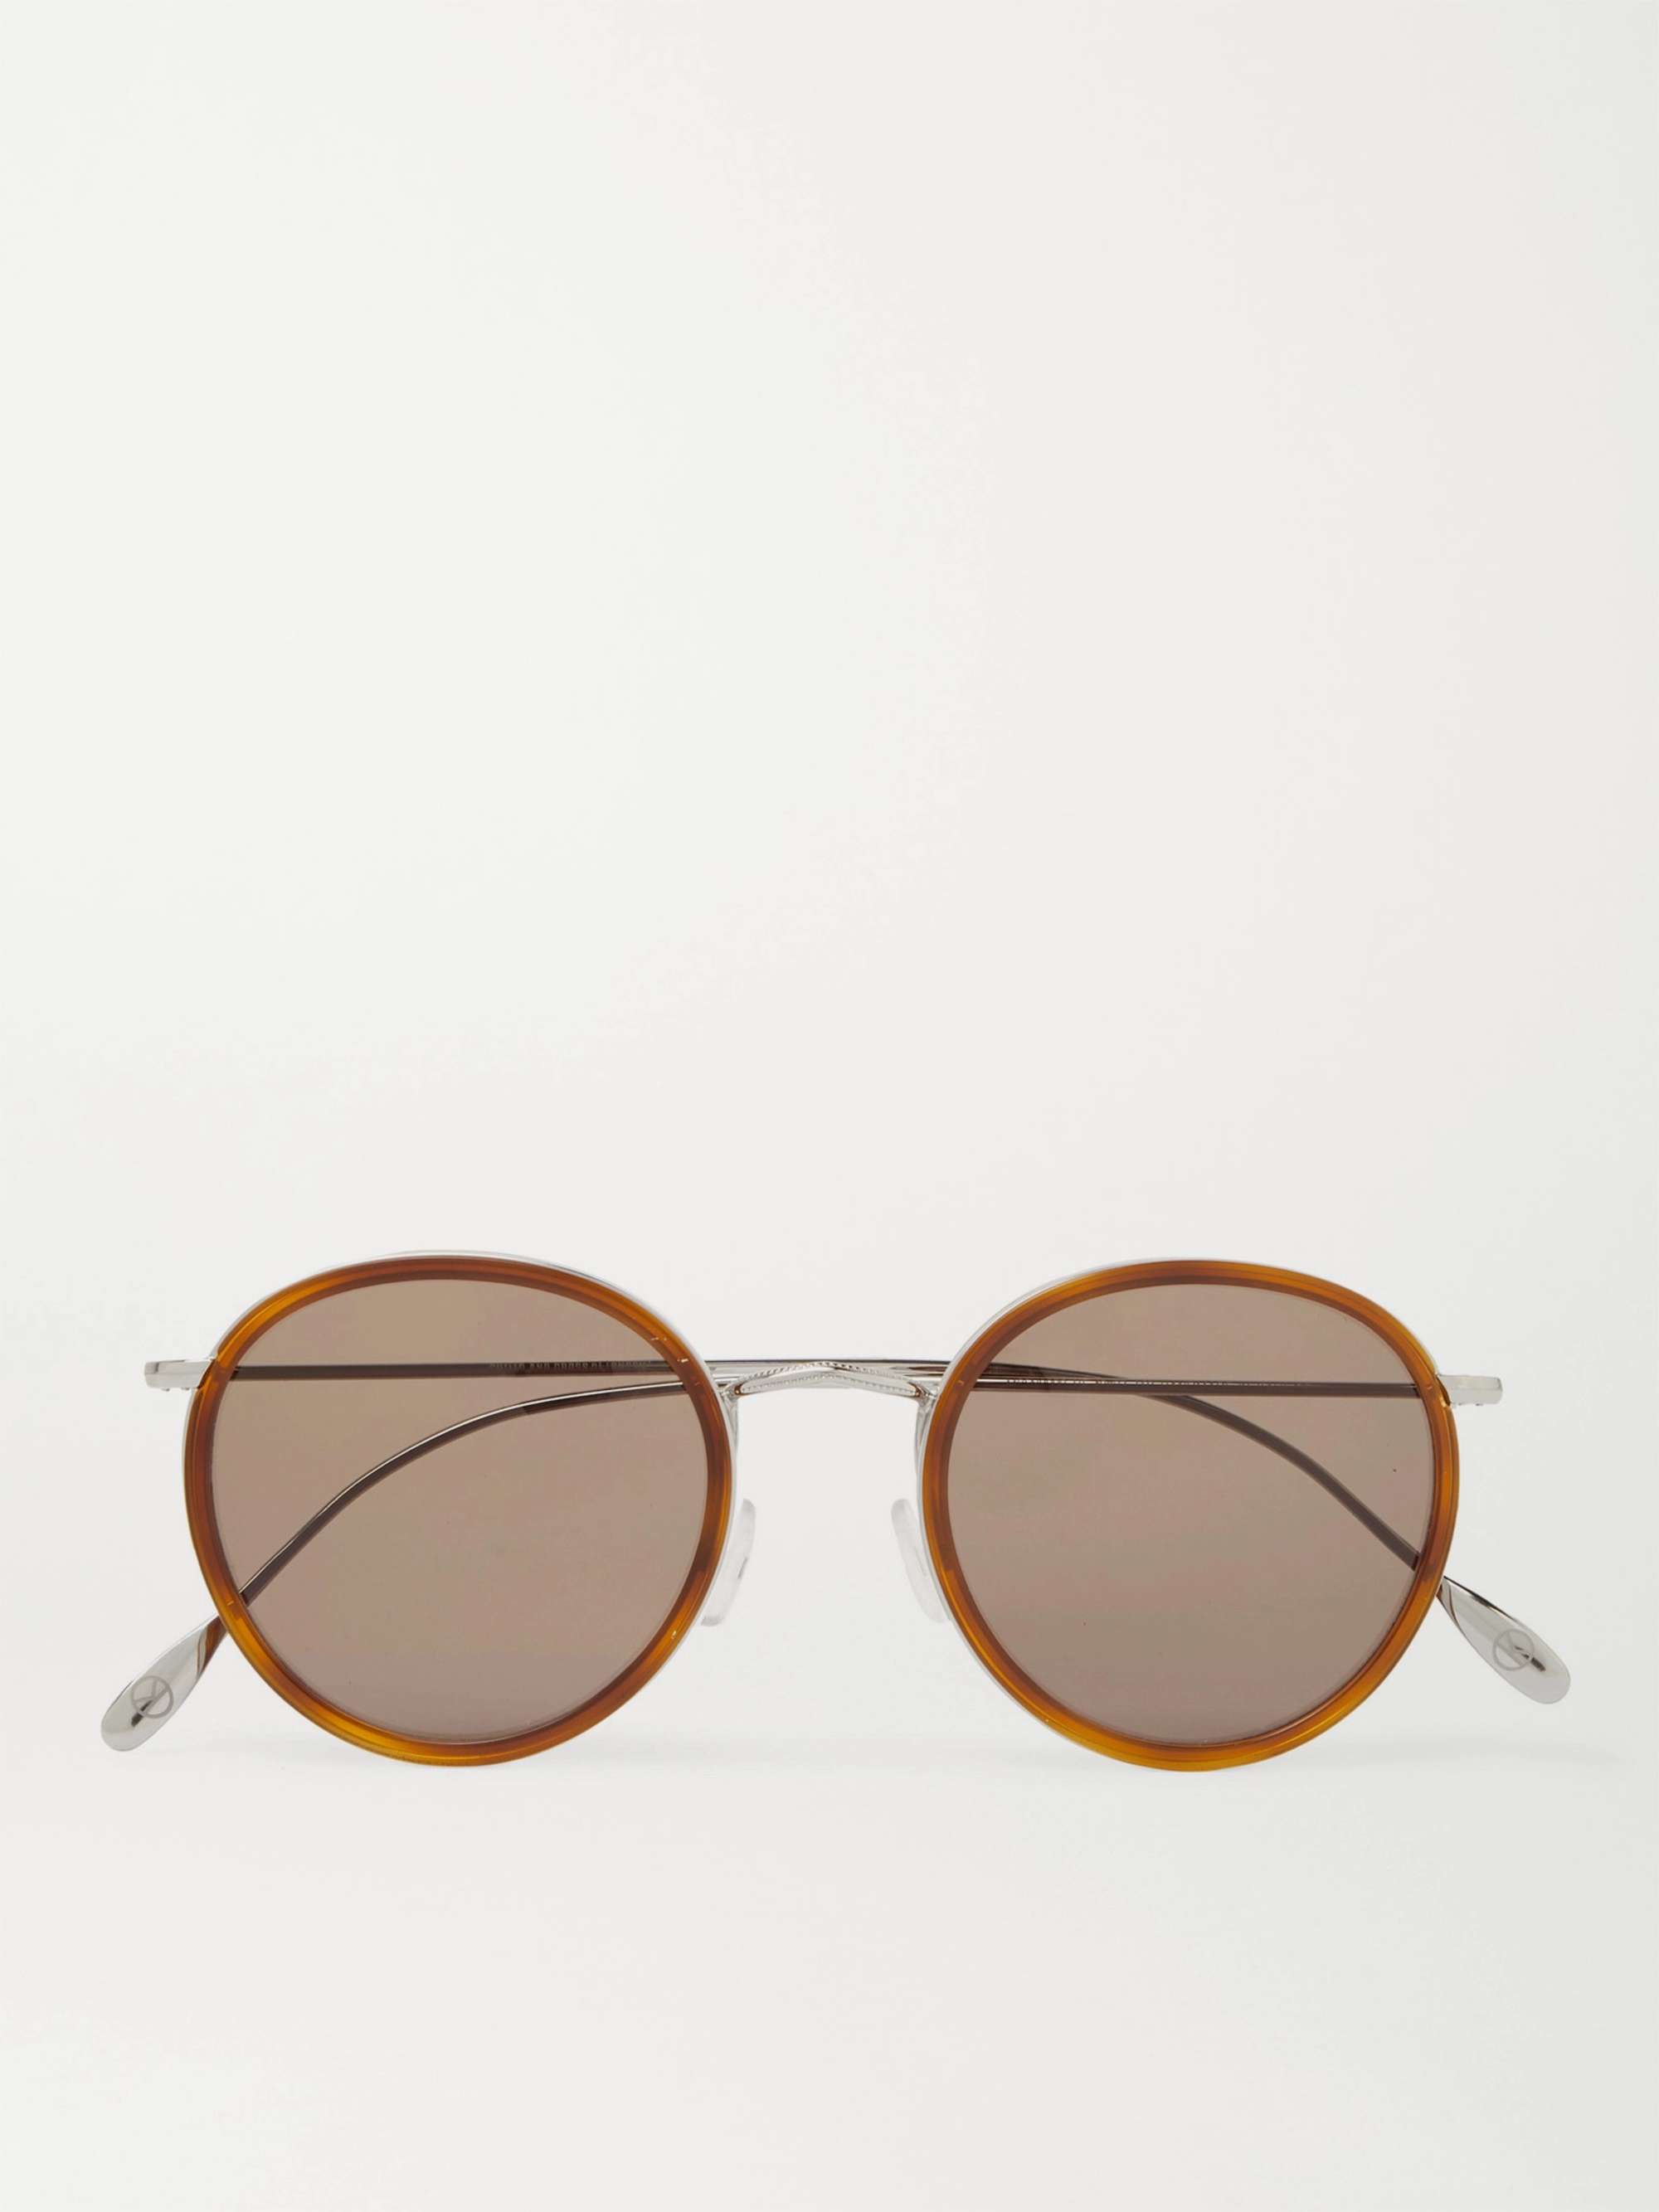 Orange St Germain Round-Frame Tortoiseshell Acetate Sunglasses 